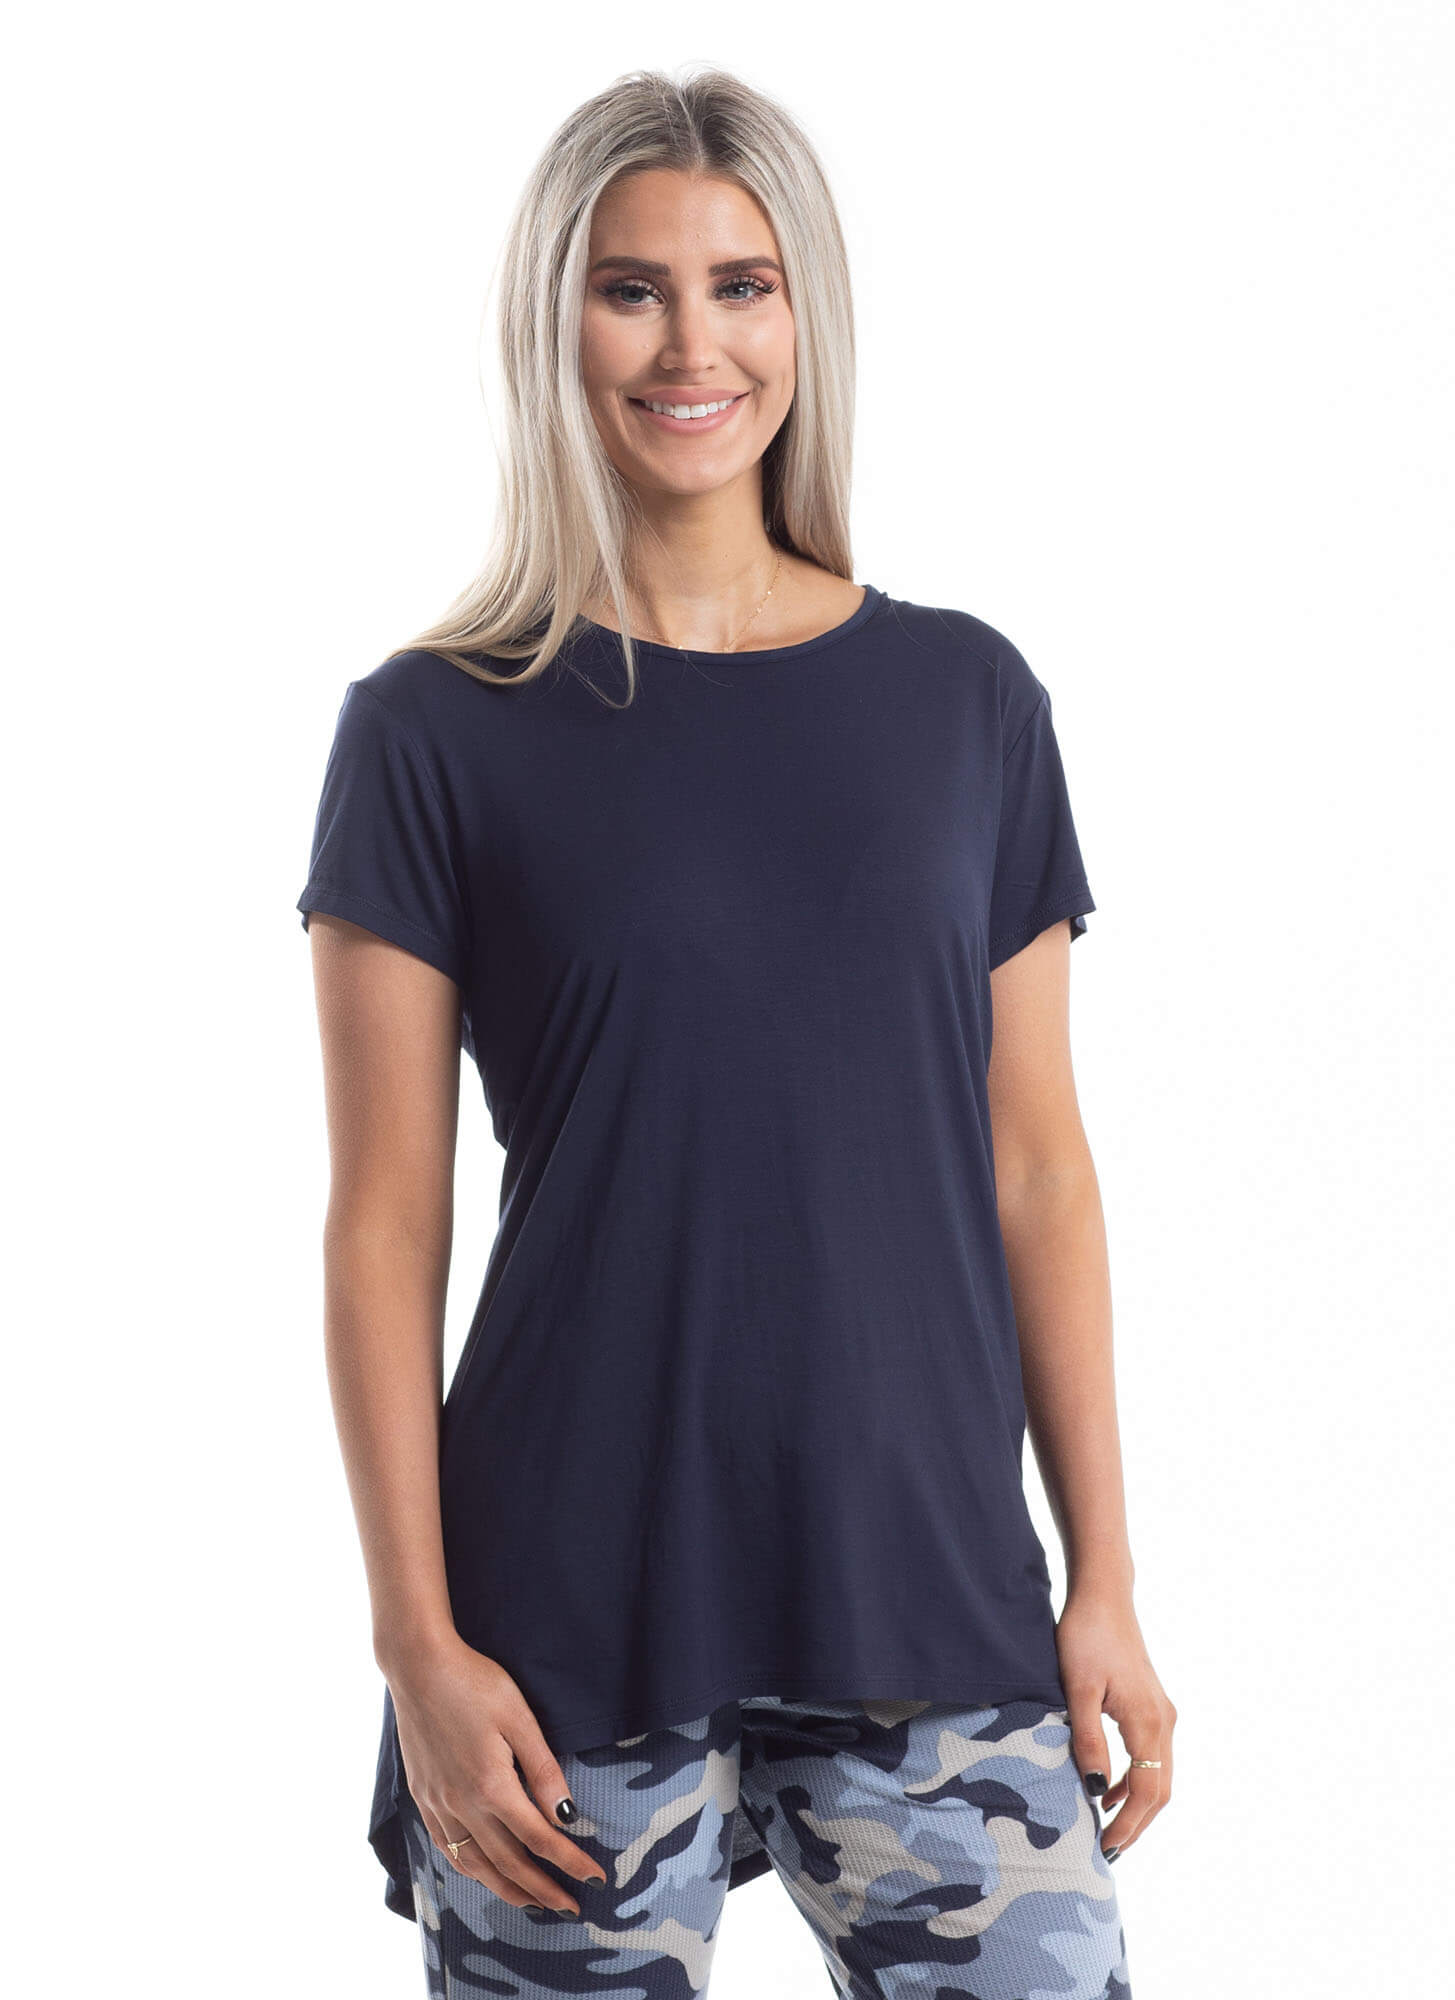 AherBiu Womens Tops Built in Bra Long Sleeve Crew Neck Comfy Pajama Tees  Solid Color Sleepwear Soft Tshirts